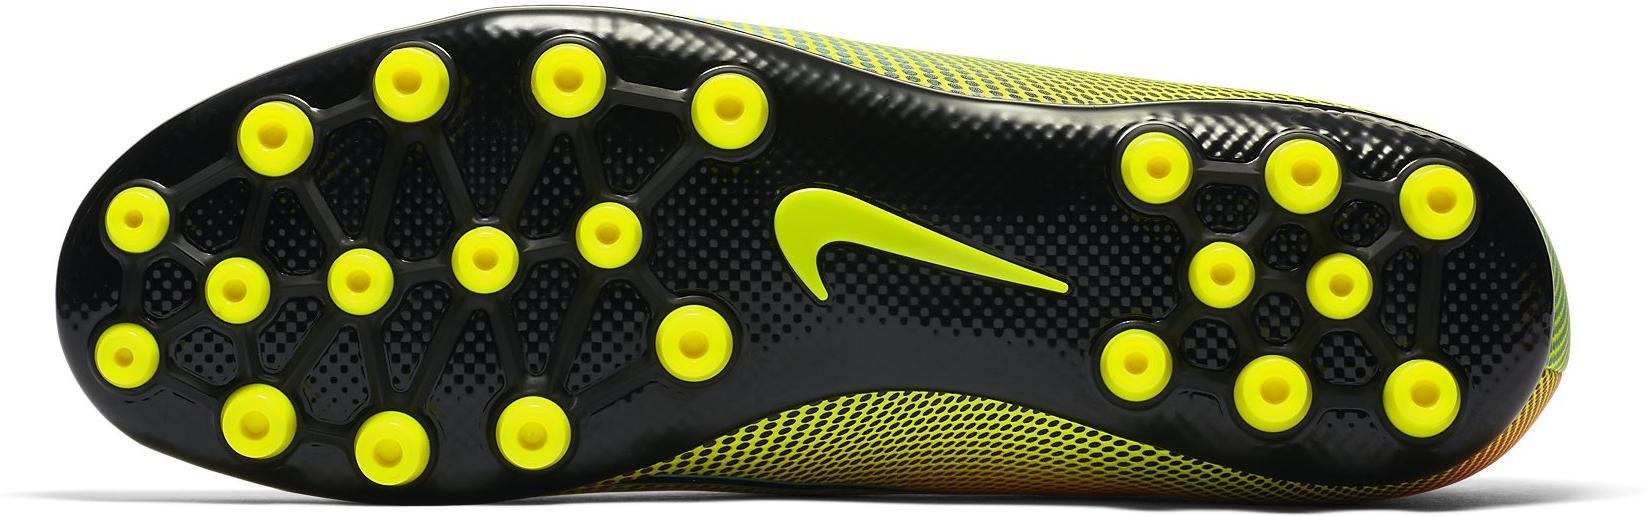 Football shoes Nike VAPOR 13 ACADEMY MDS AG